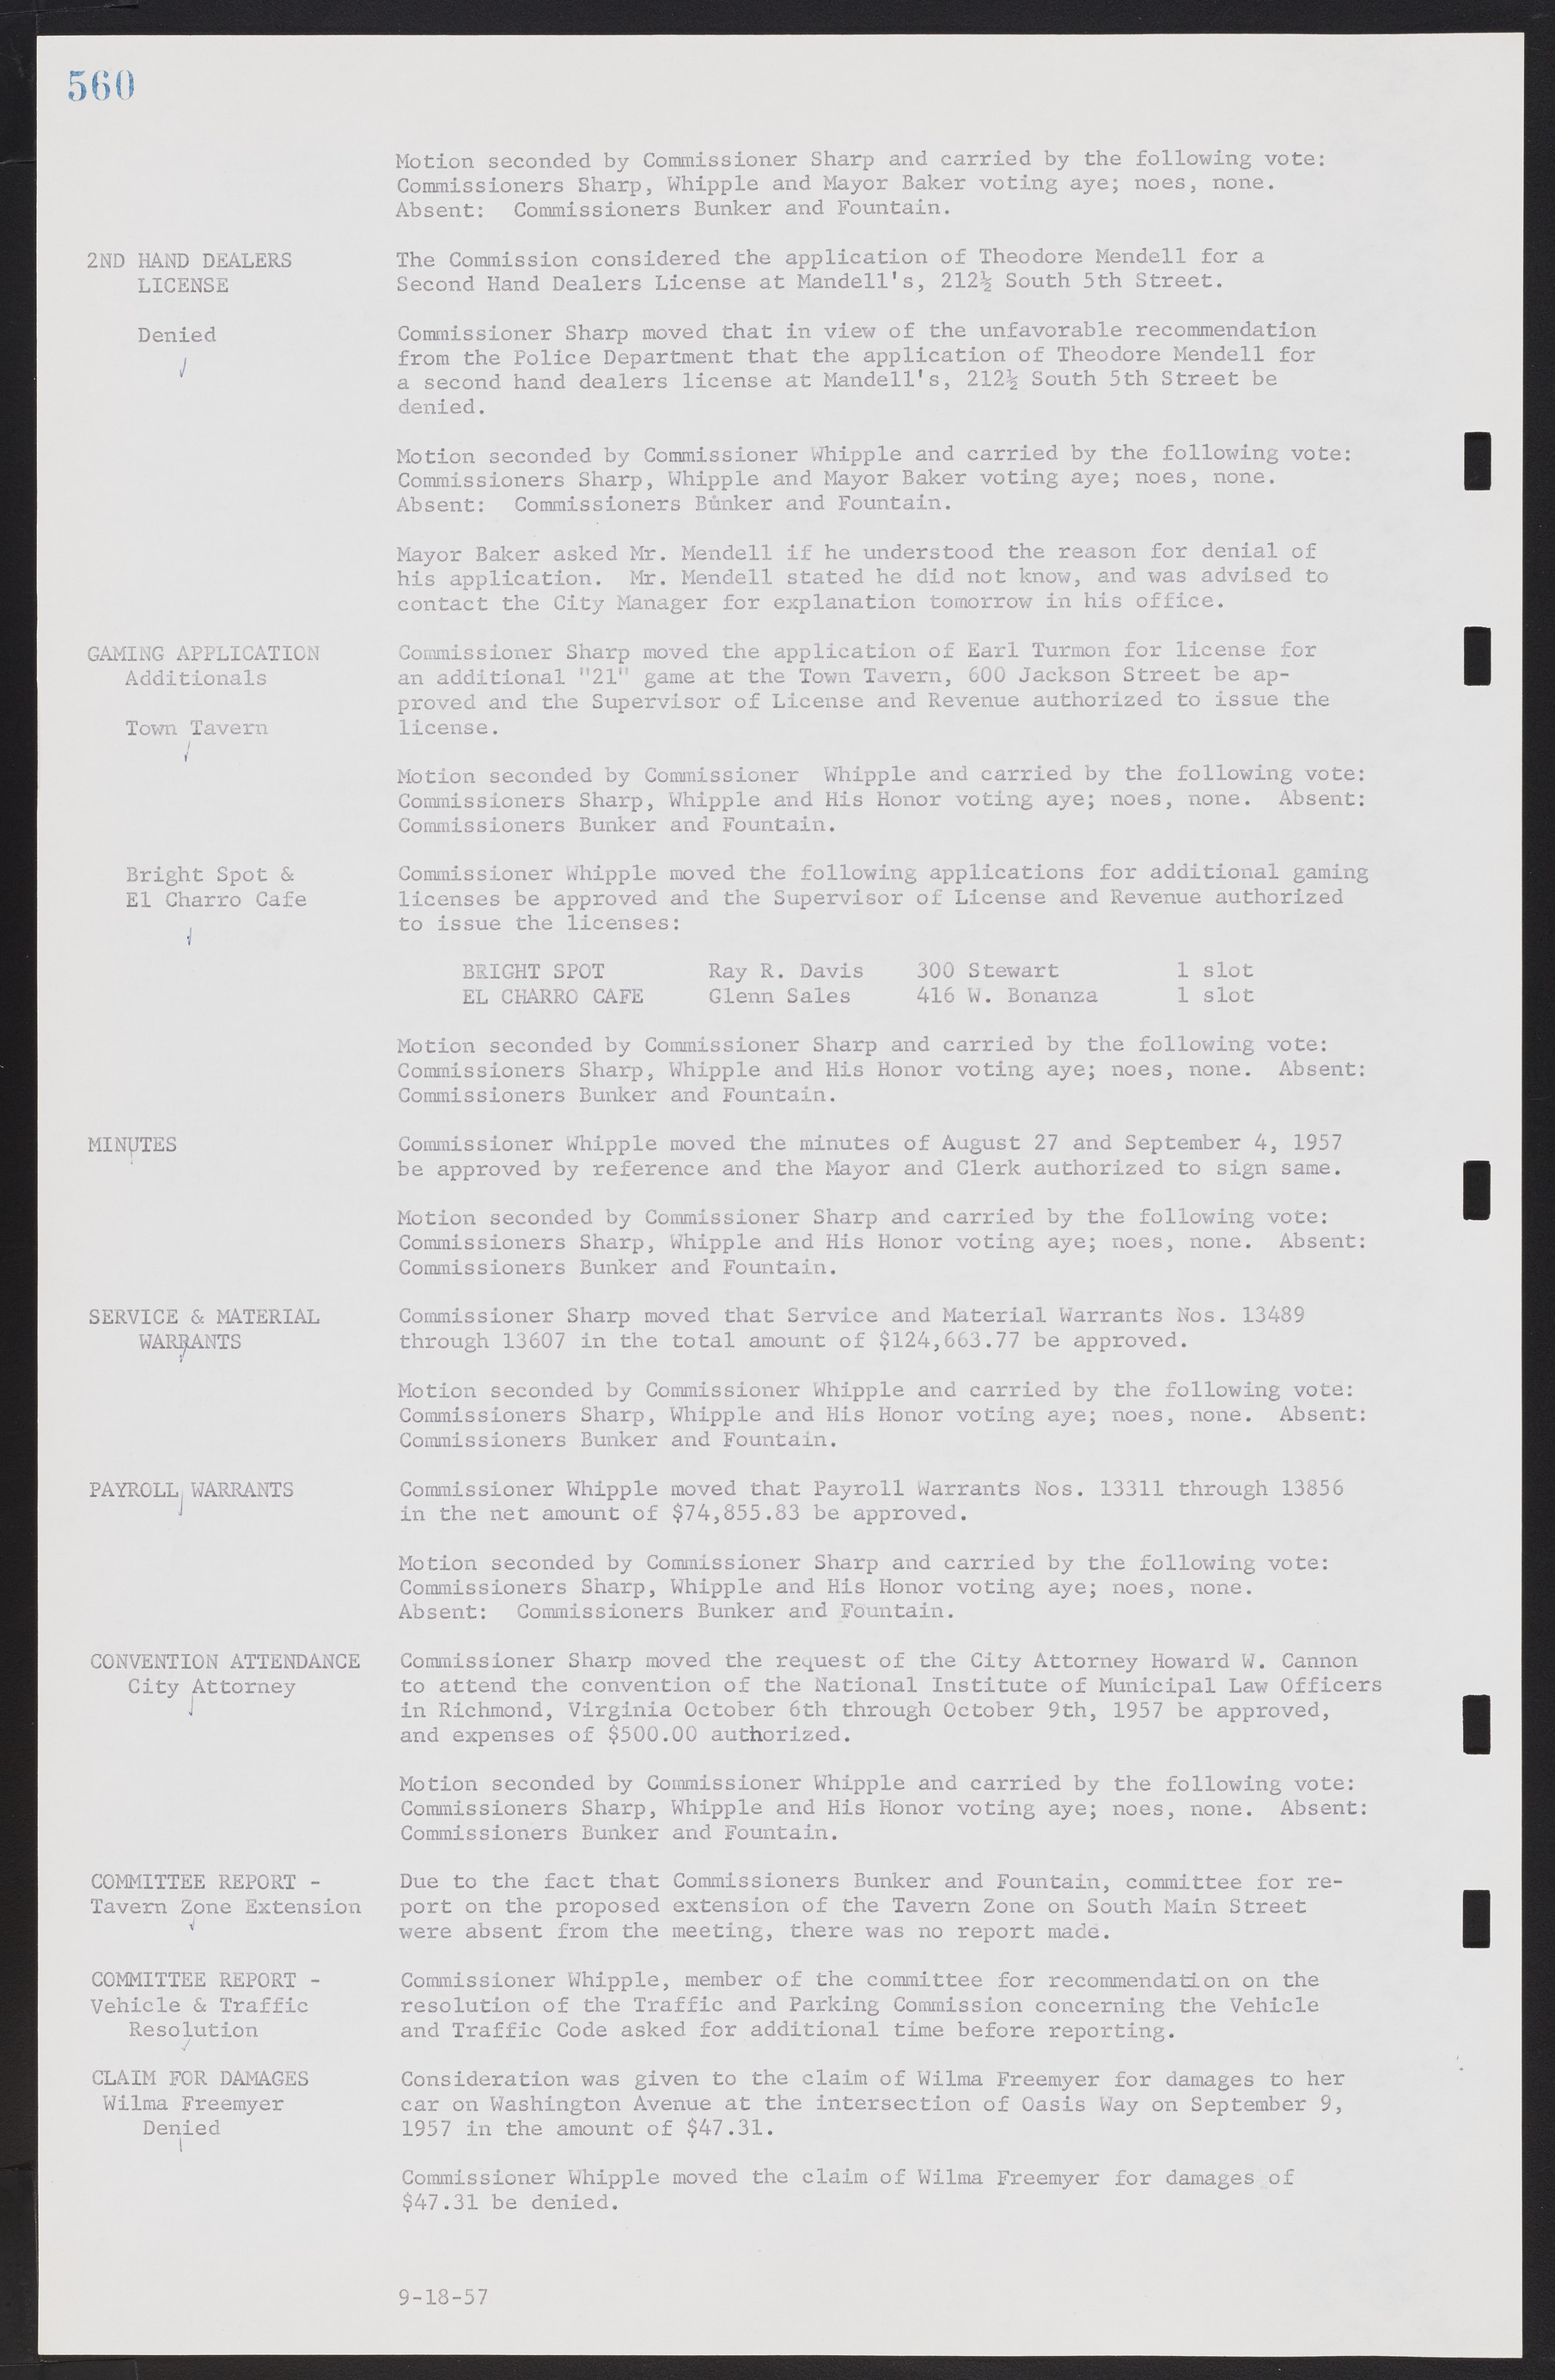 Las Vegas City Commission Minutes, September 21, 1955 to November 20, 1957, lvc000010-580